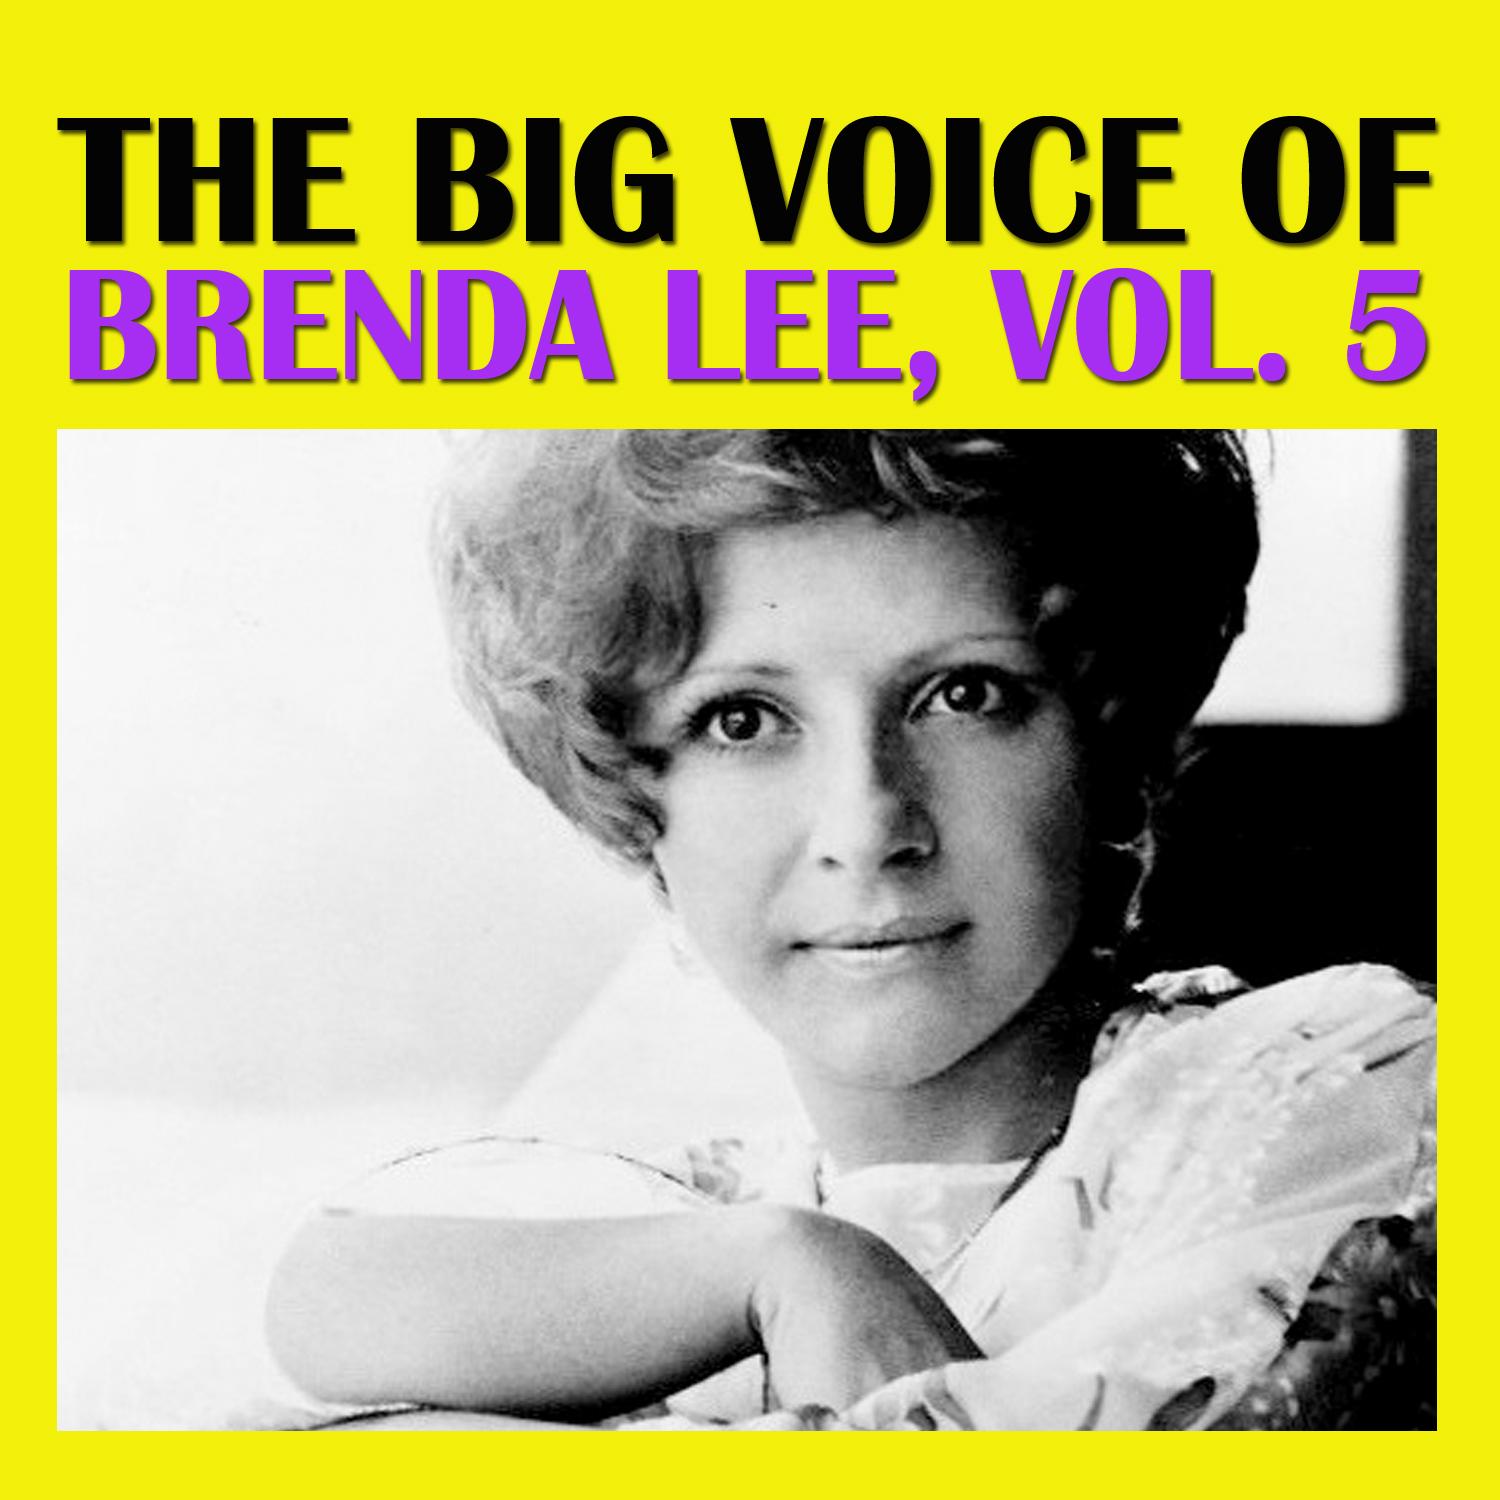 The Big Voice of Brenda Lee, Vol. 6